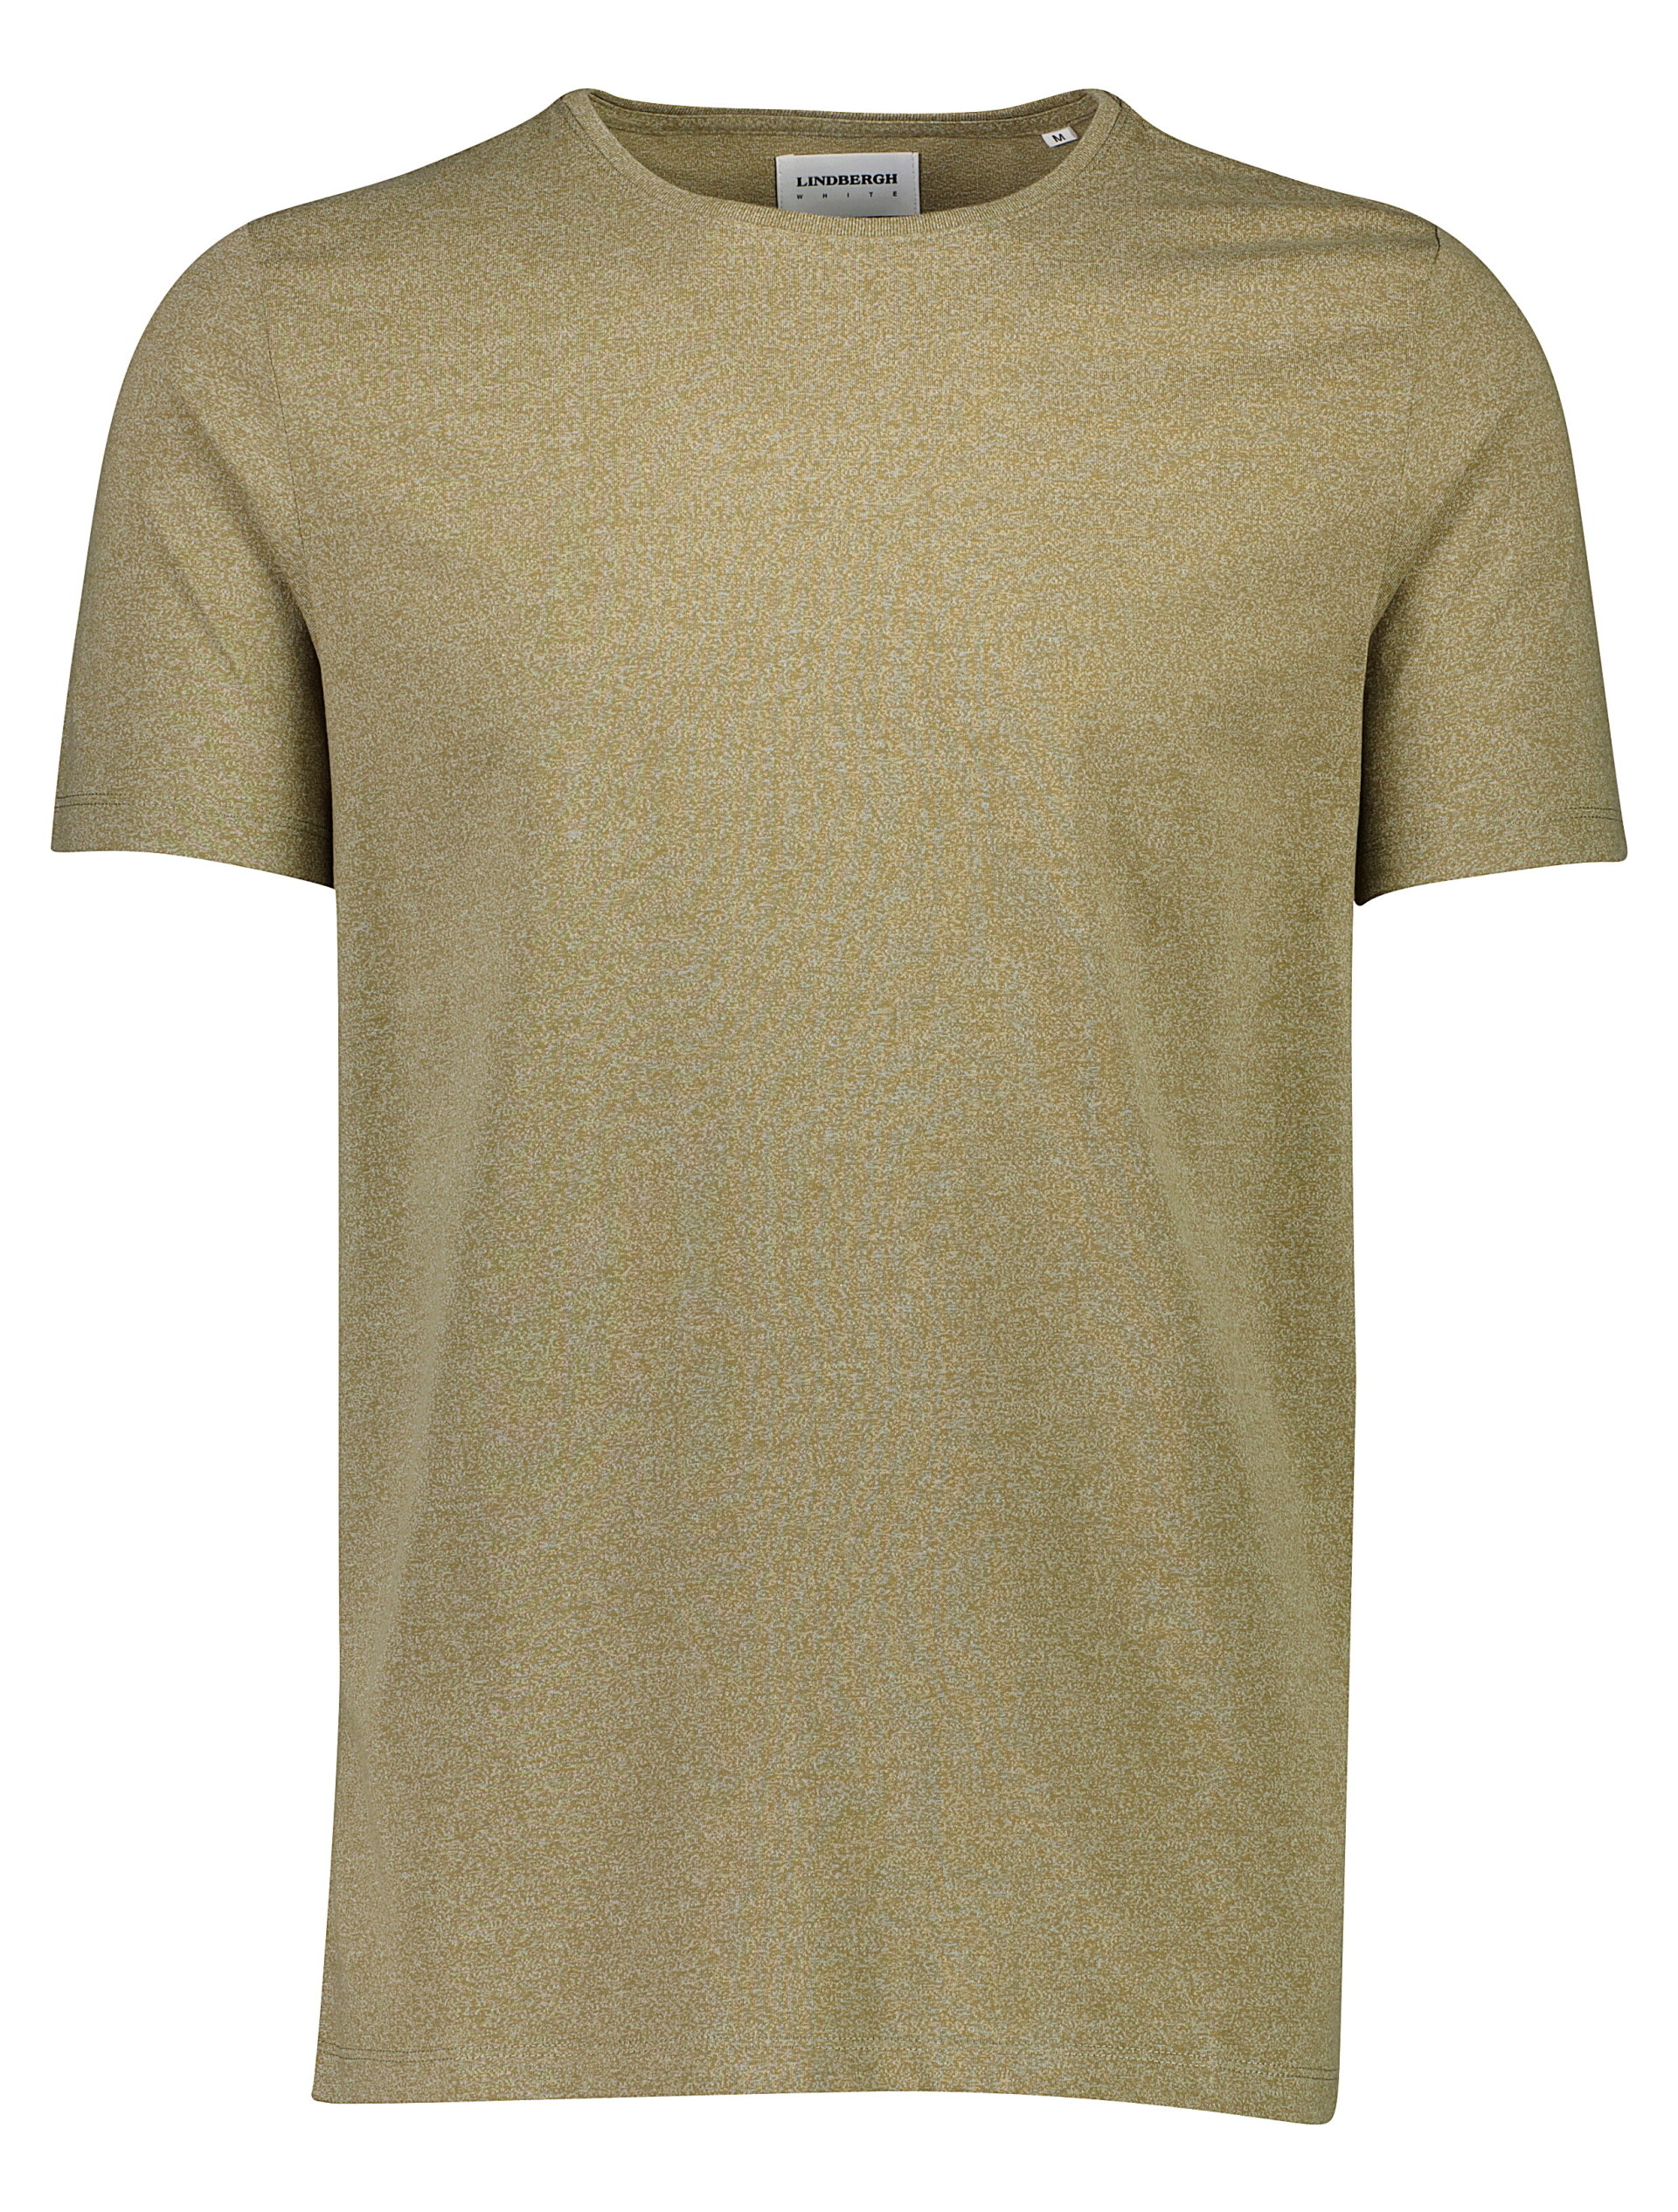 Lindbergh T-shirt grün / lt army mix 123